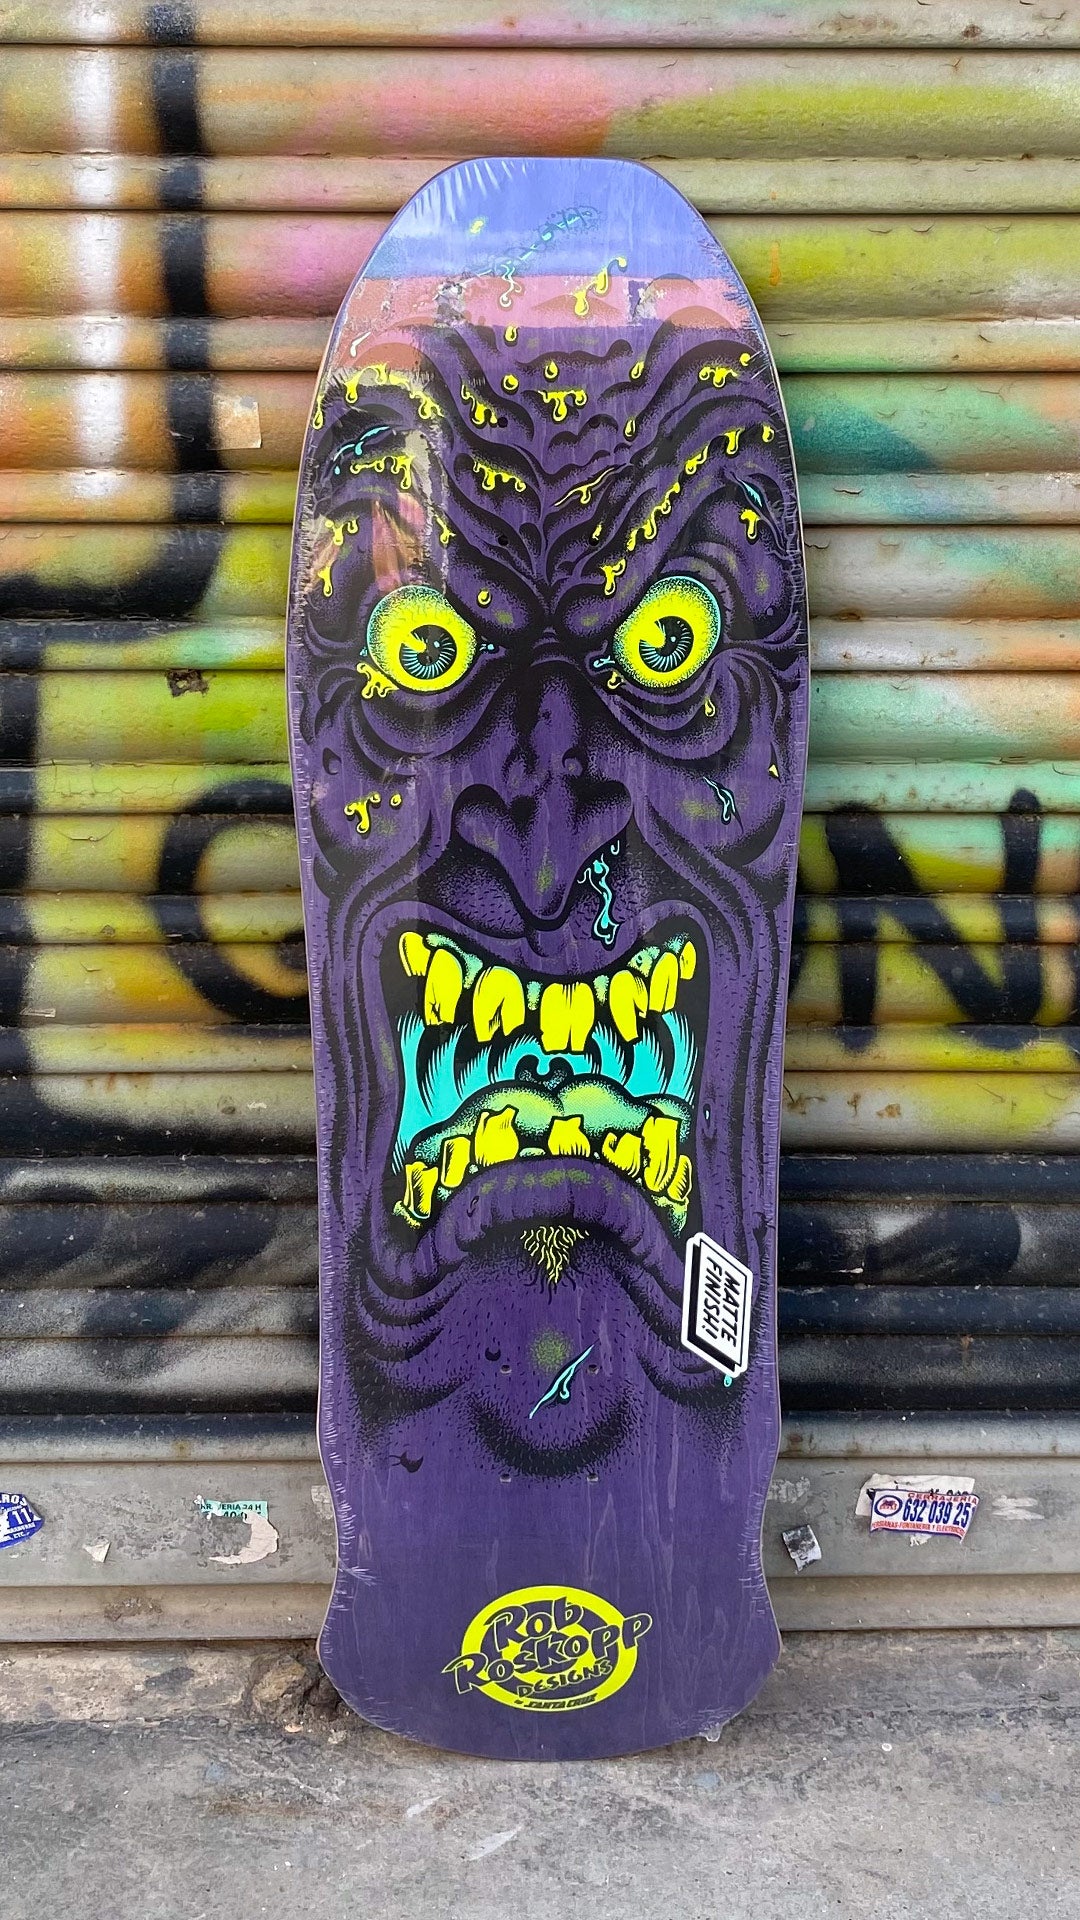 Santa Cruz Roskopp Face Purple Reissue 9.5 Skateboard Deck - Tabla Tablas Santa Cruz Skateboards 